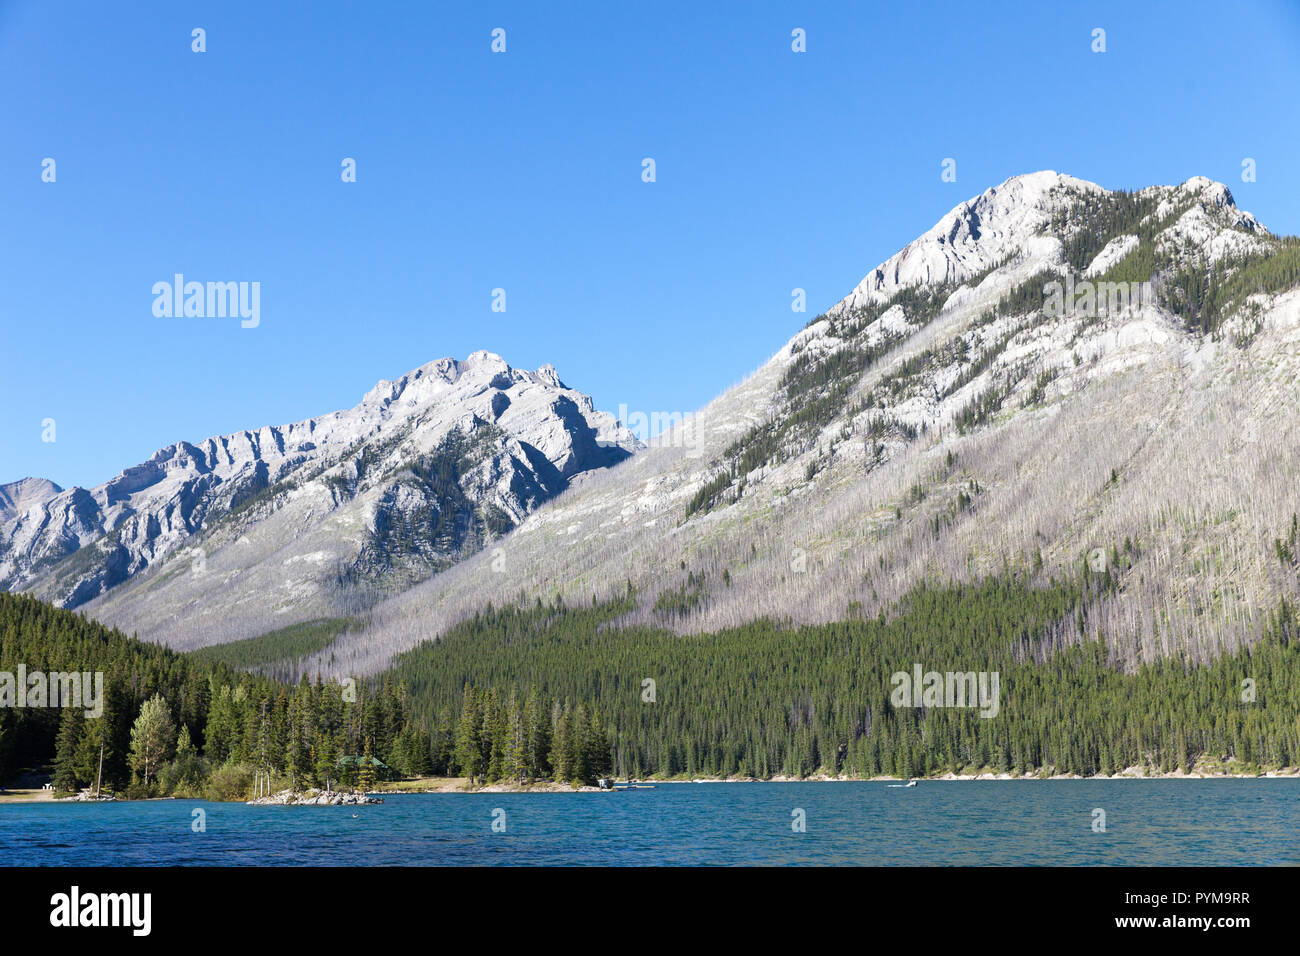 Lake Minnewanka in the Canadian Rocky Mountains, Alberta, Canada Stock Photo